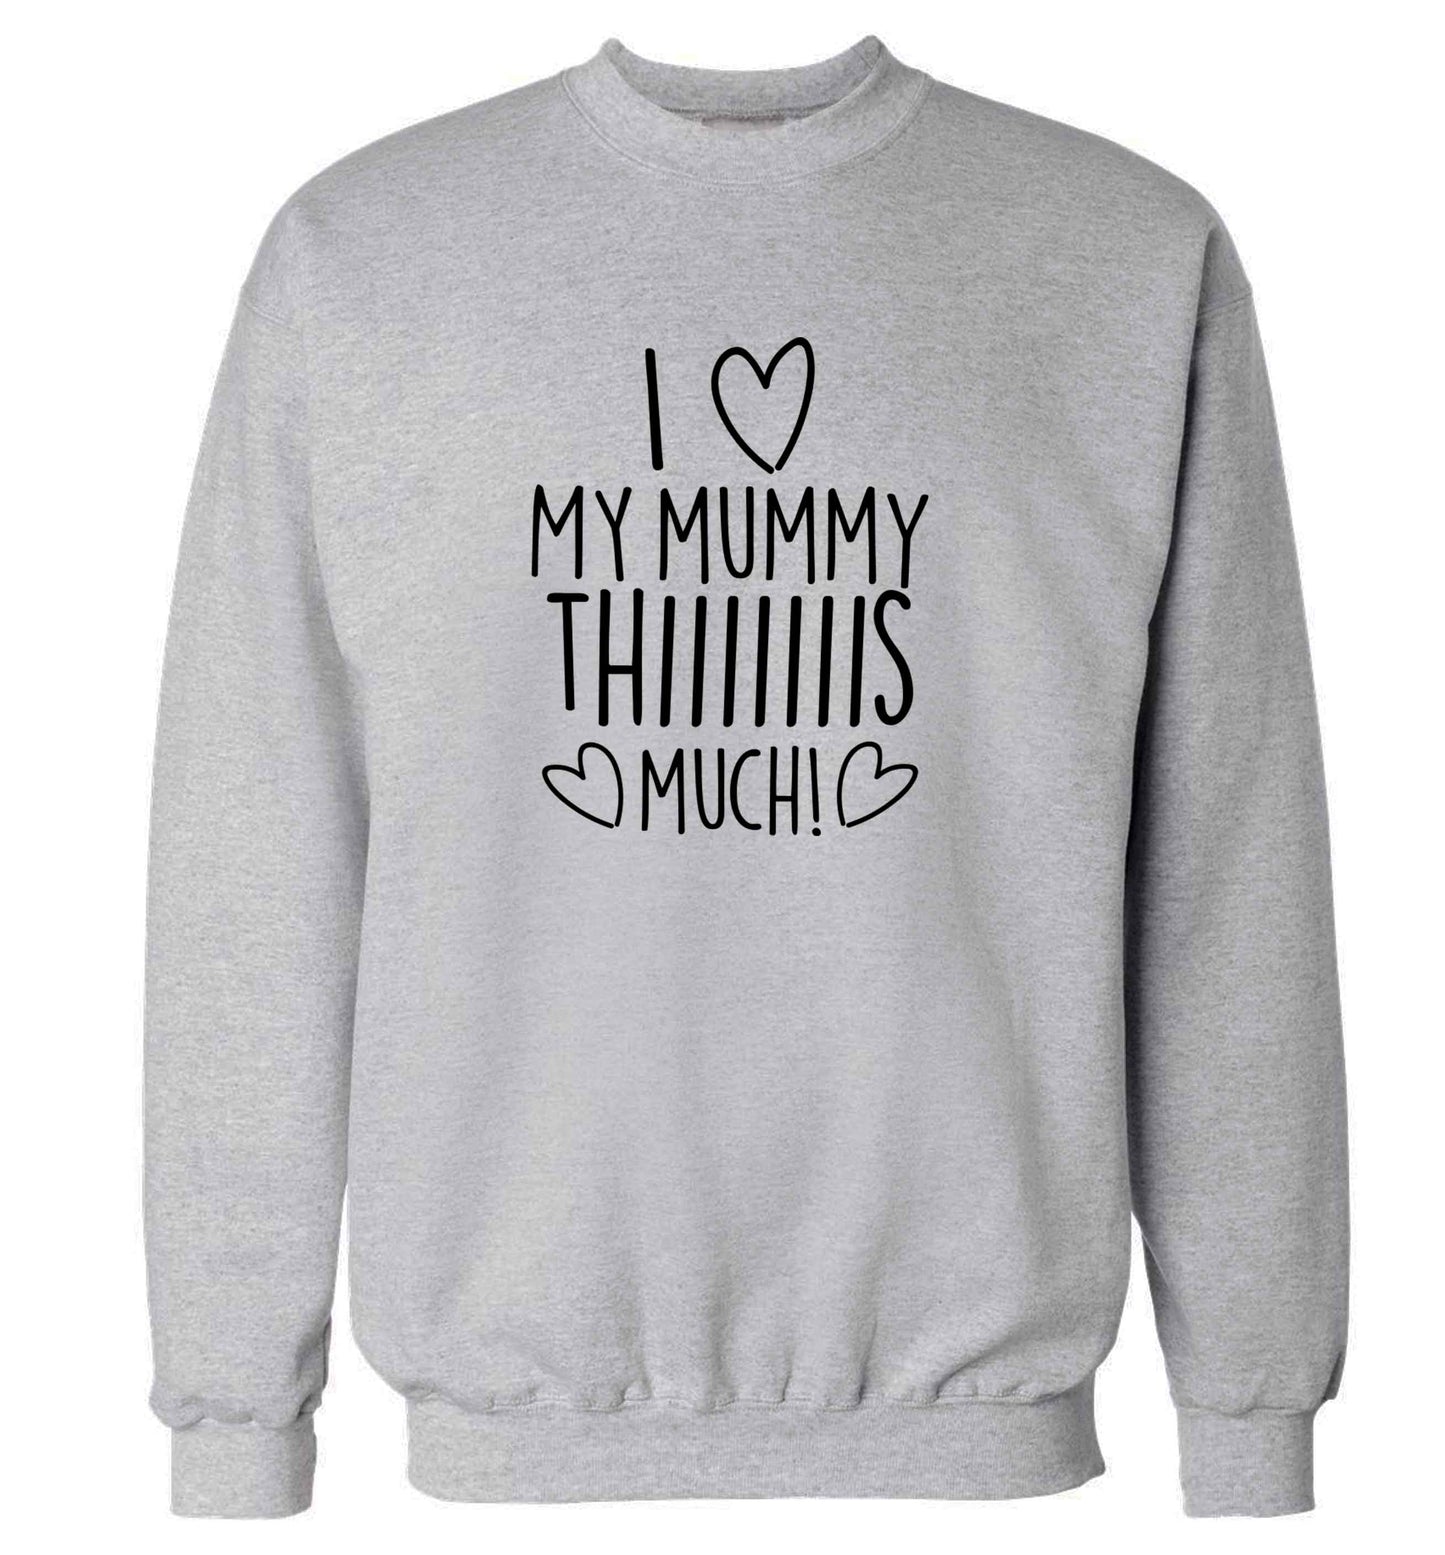 I love my mummy thiiiiis much! adult's unisex grey sweater 2XL